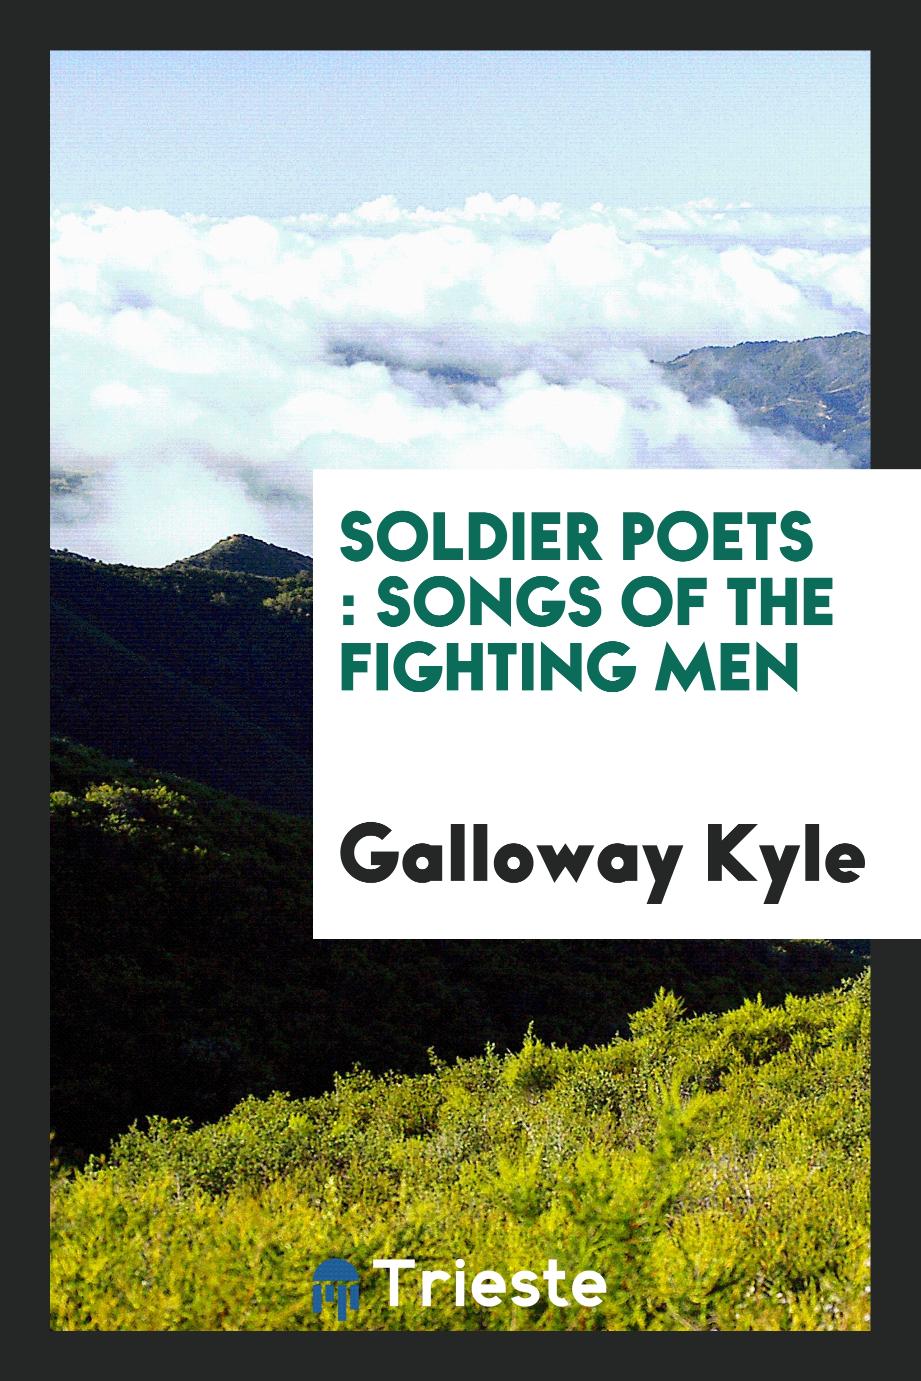 Soldier poets : songs of the fighting men